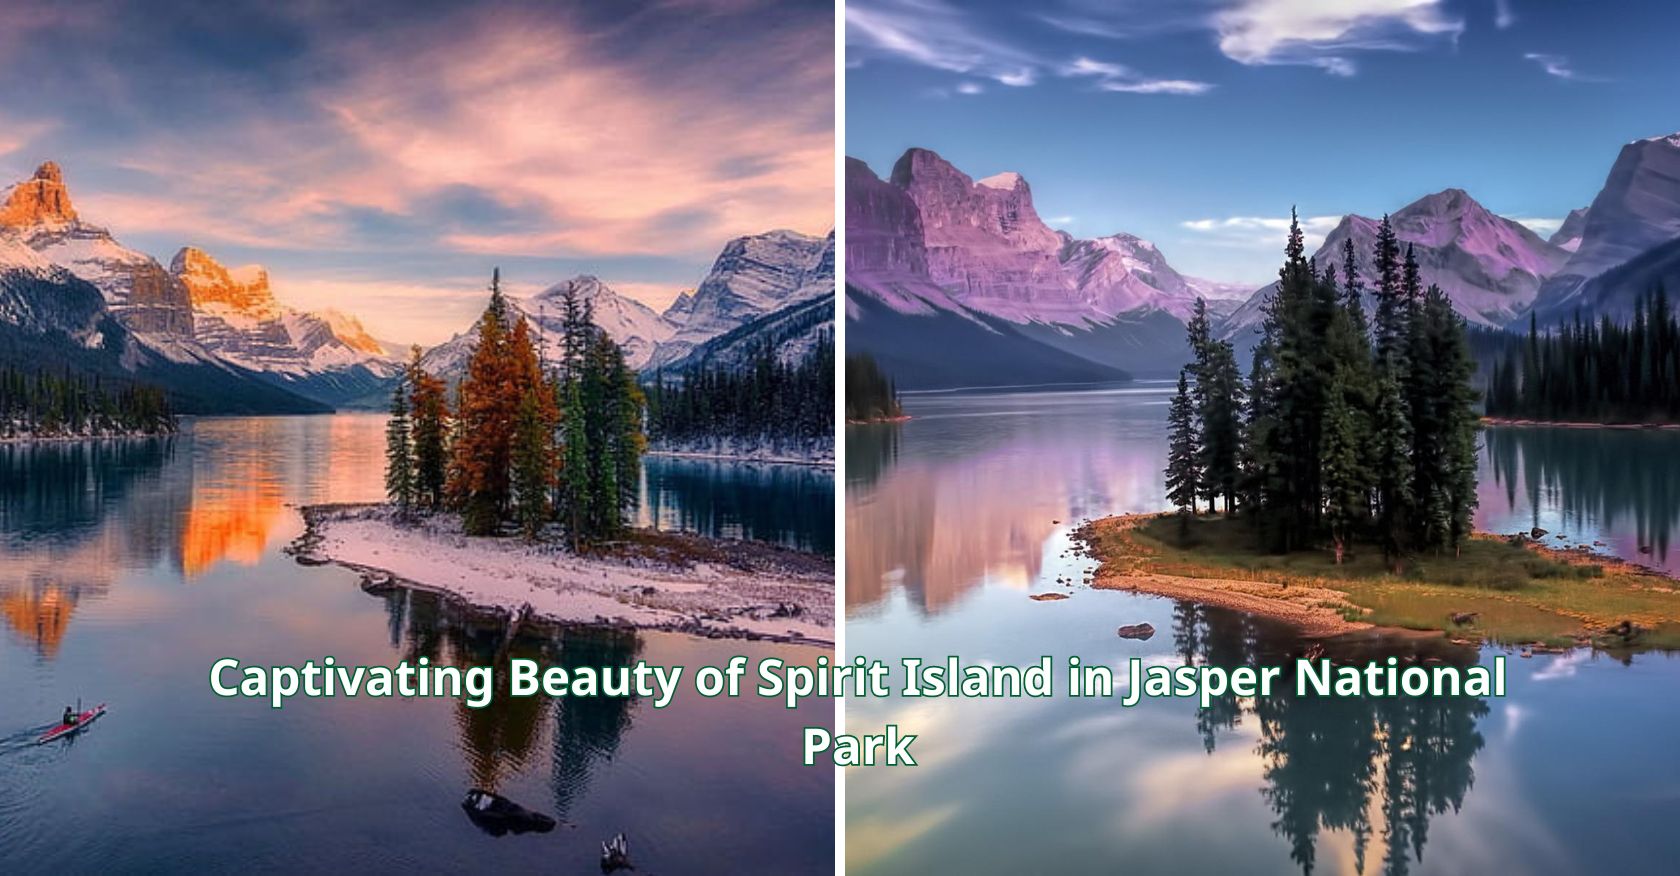 Captivating Beauty of Spirit Island in Jasper National Park